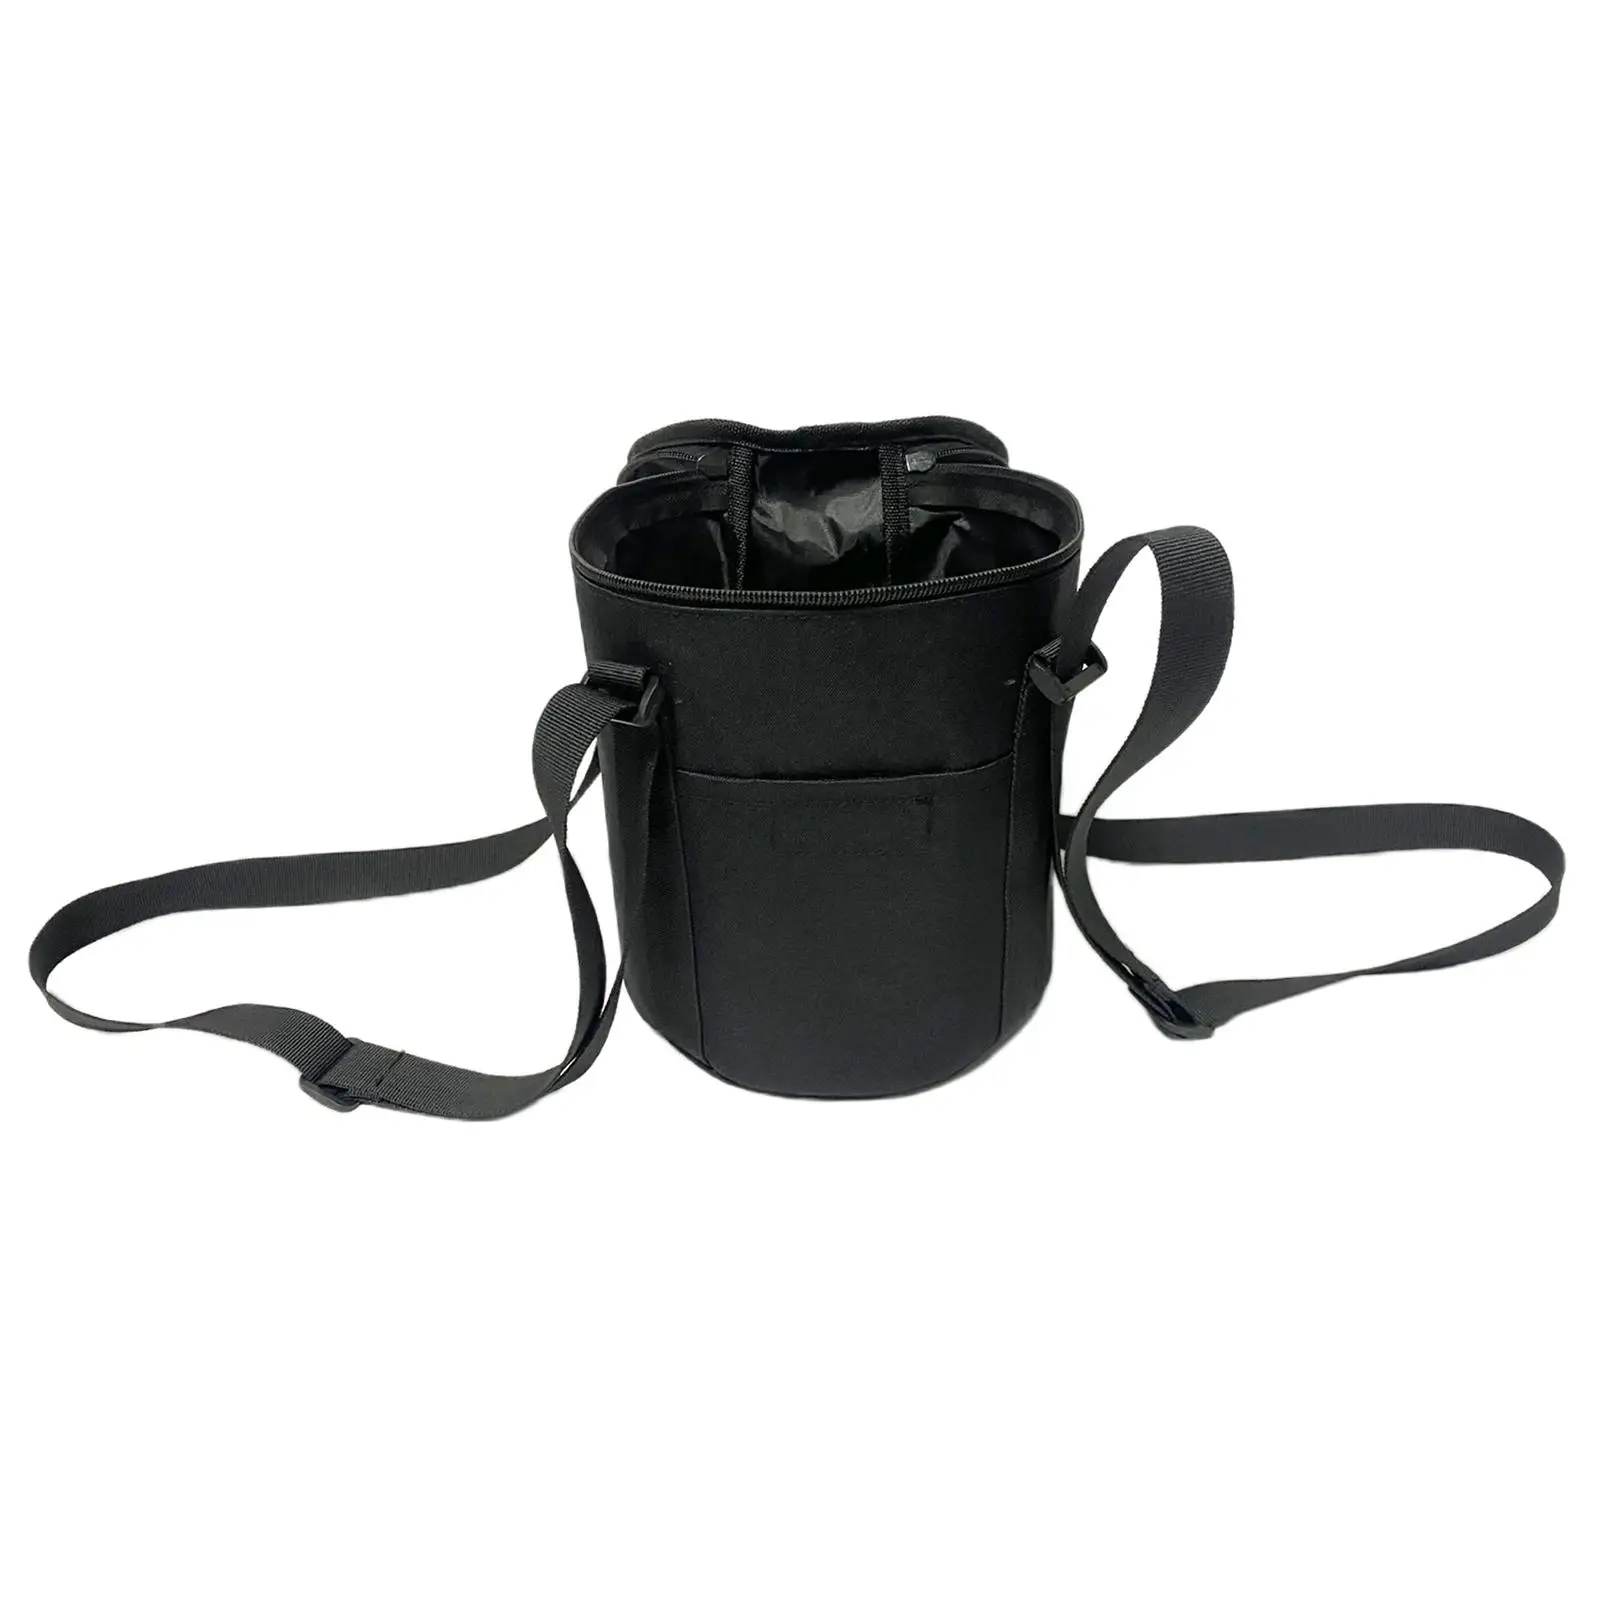 Tabletop Fire Pit Bag Adjustable Shoulder Straps Fire Pit Storage Bag 7.5``x7.5``x7.9`` Portable for Outdoor Camping RV Travel